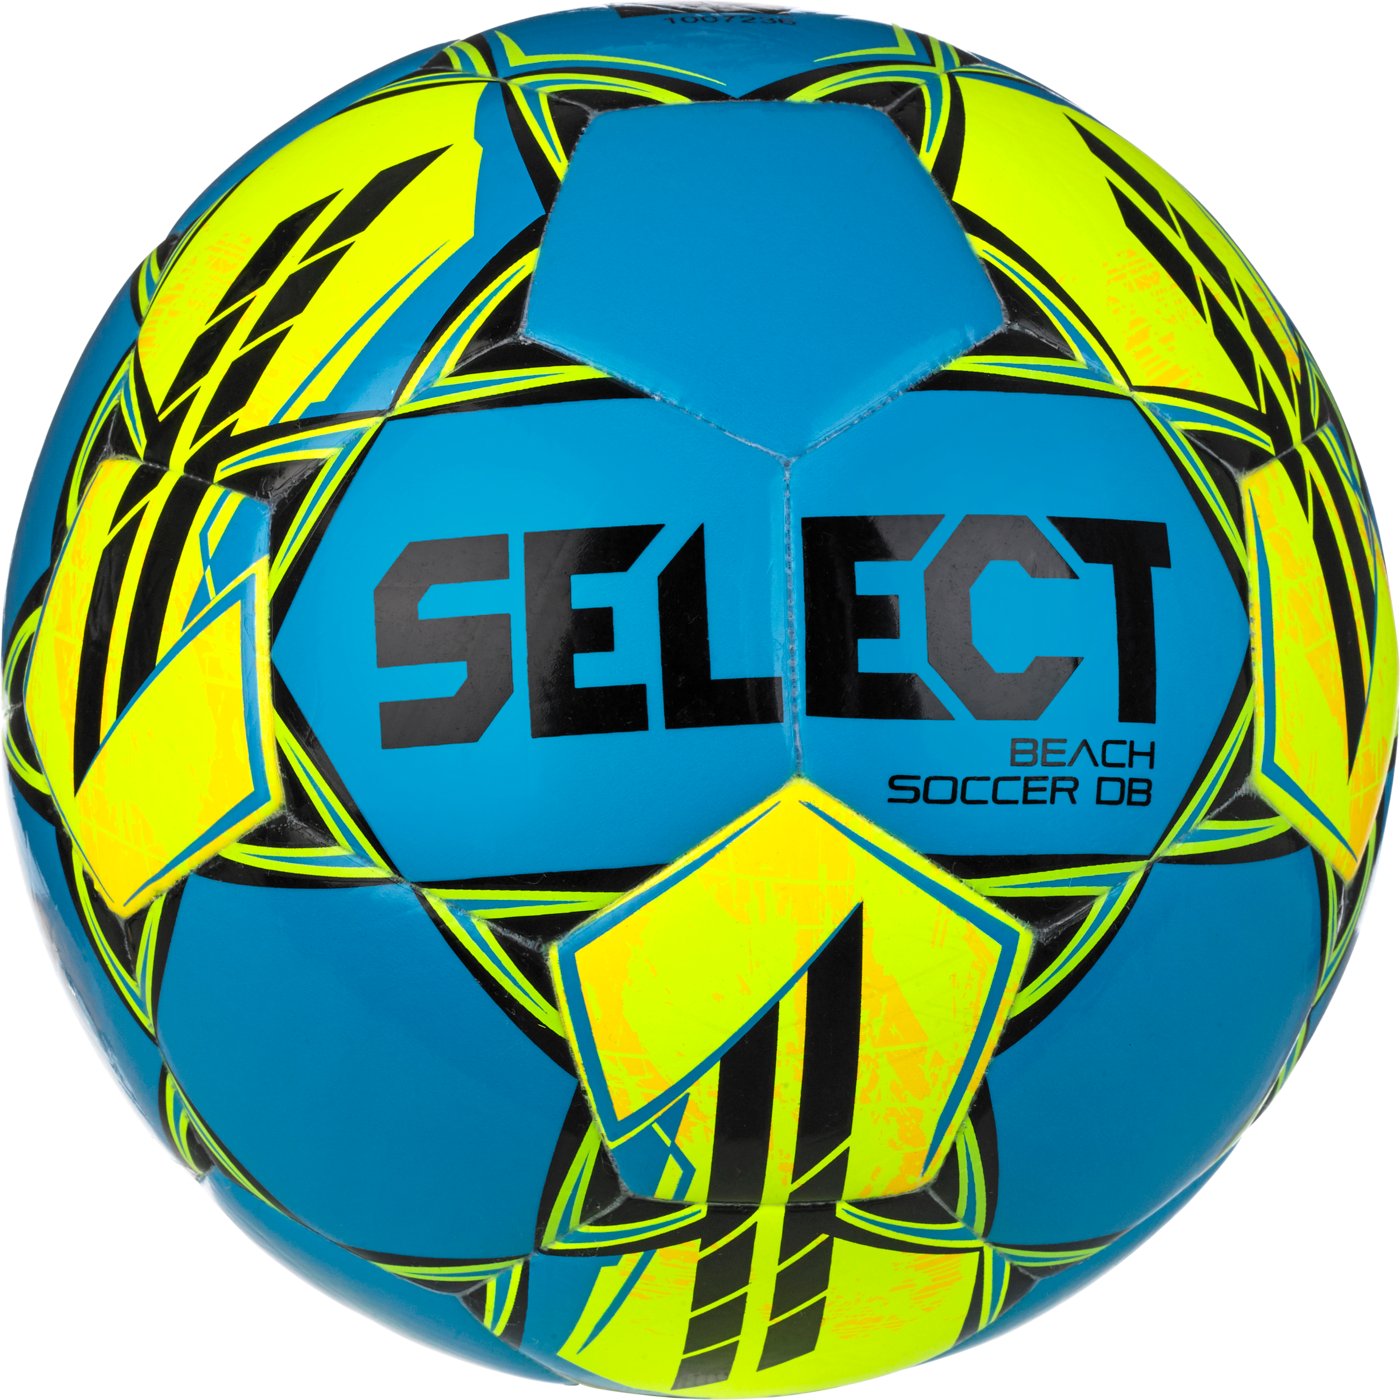 М'яч для пляжного футболу SELECT Beach Soccer v23 (137) син/жовтий, 5, 5